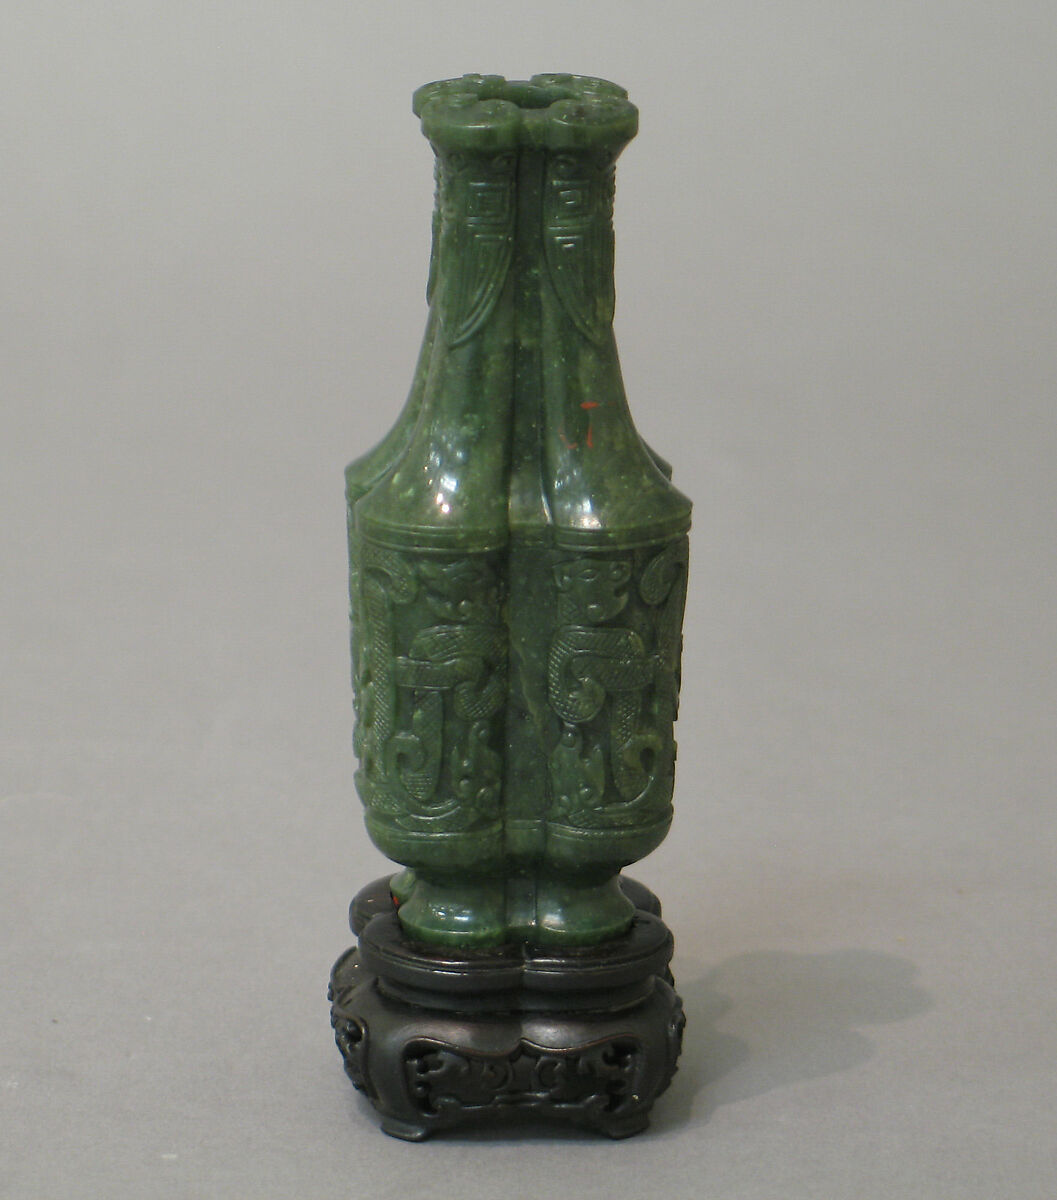 Vase with archaic motifs, Jade (nephrite), China 